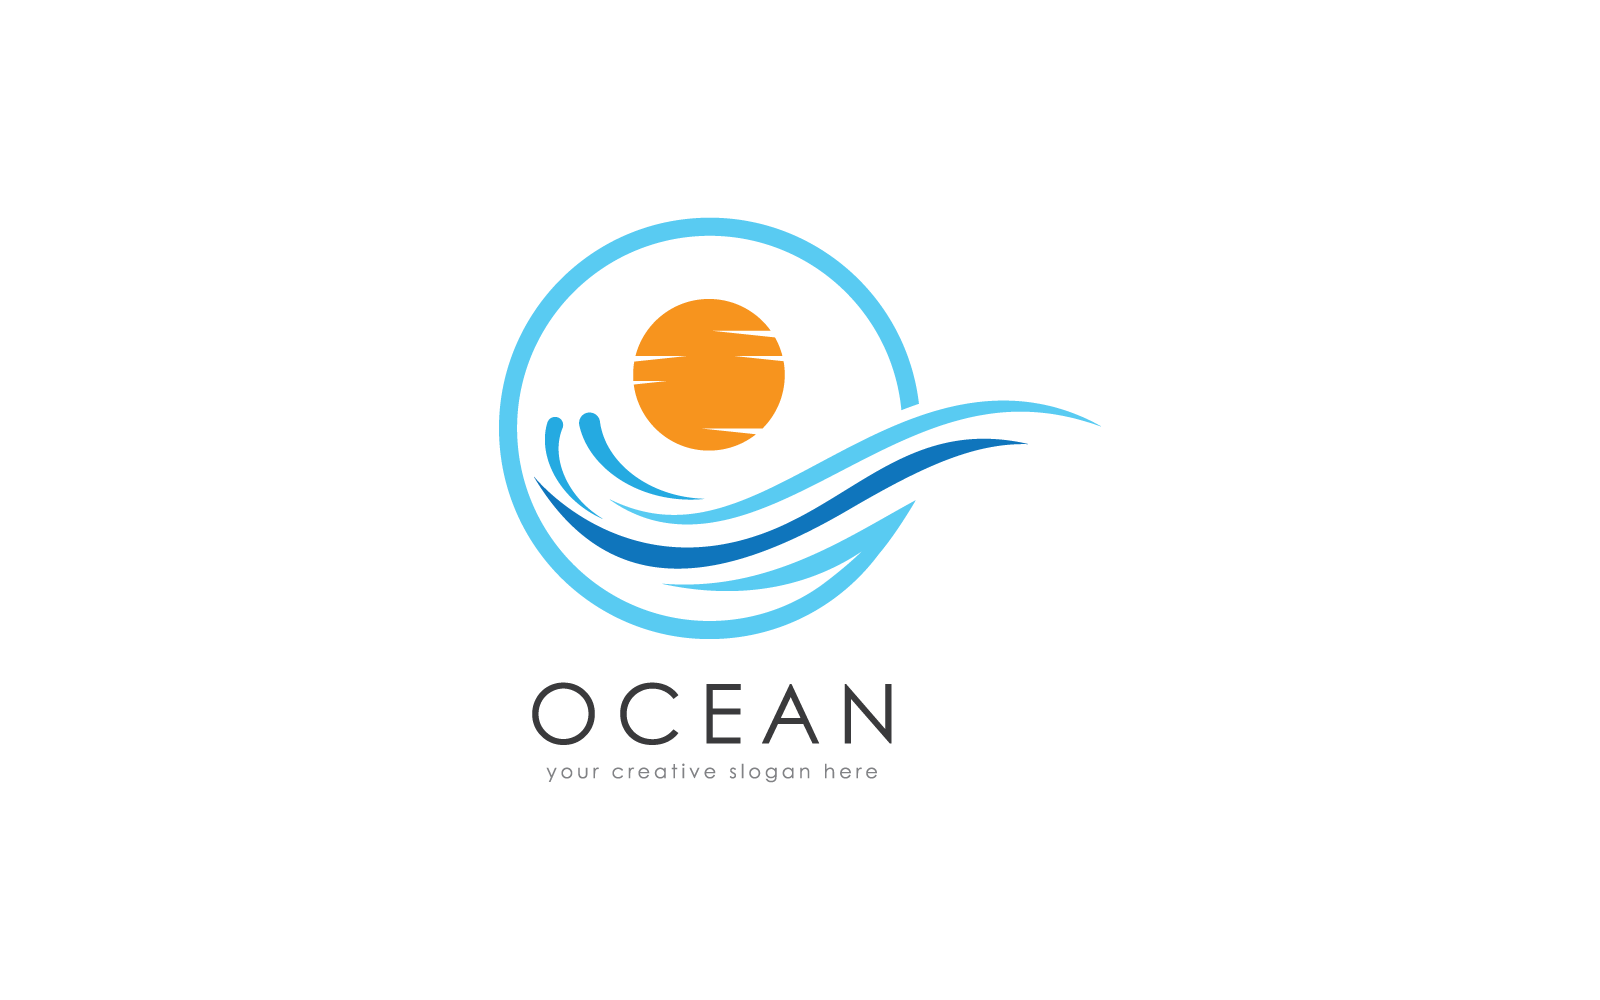 Water Wave flat design logo illustration template vector